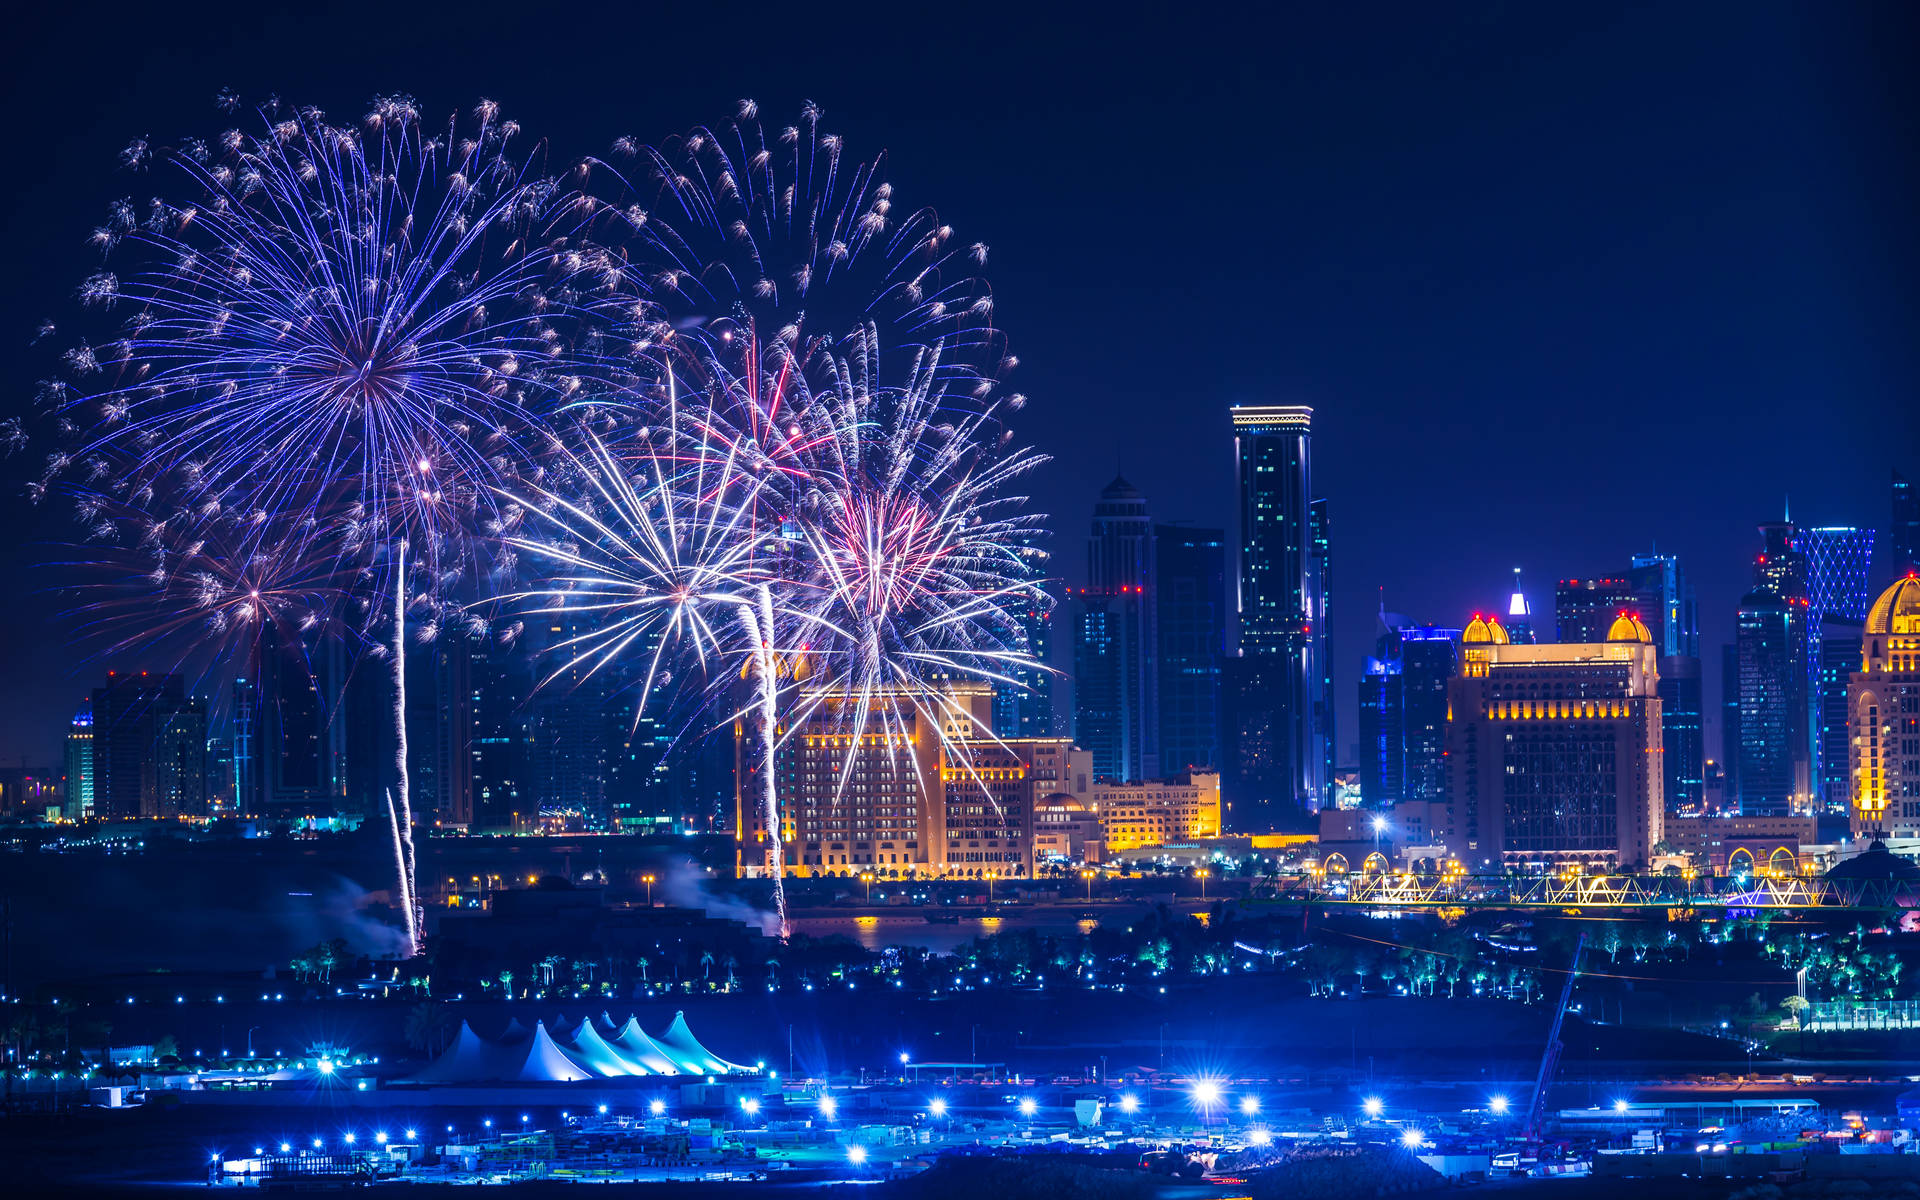 Qatar's Magical View Fireworks Display